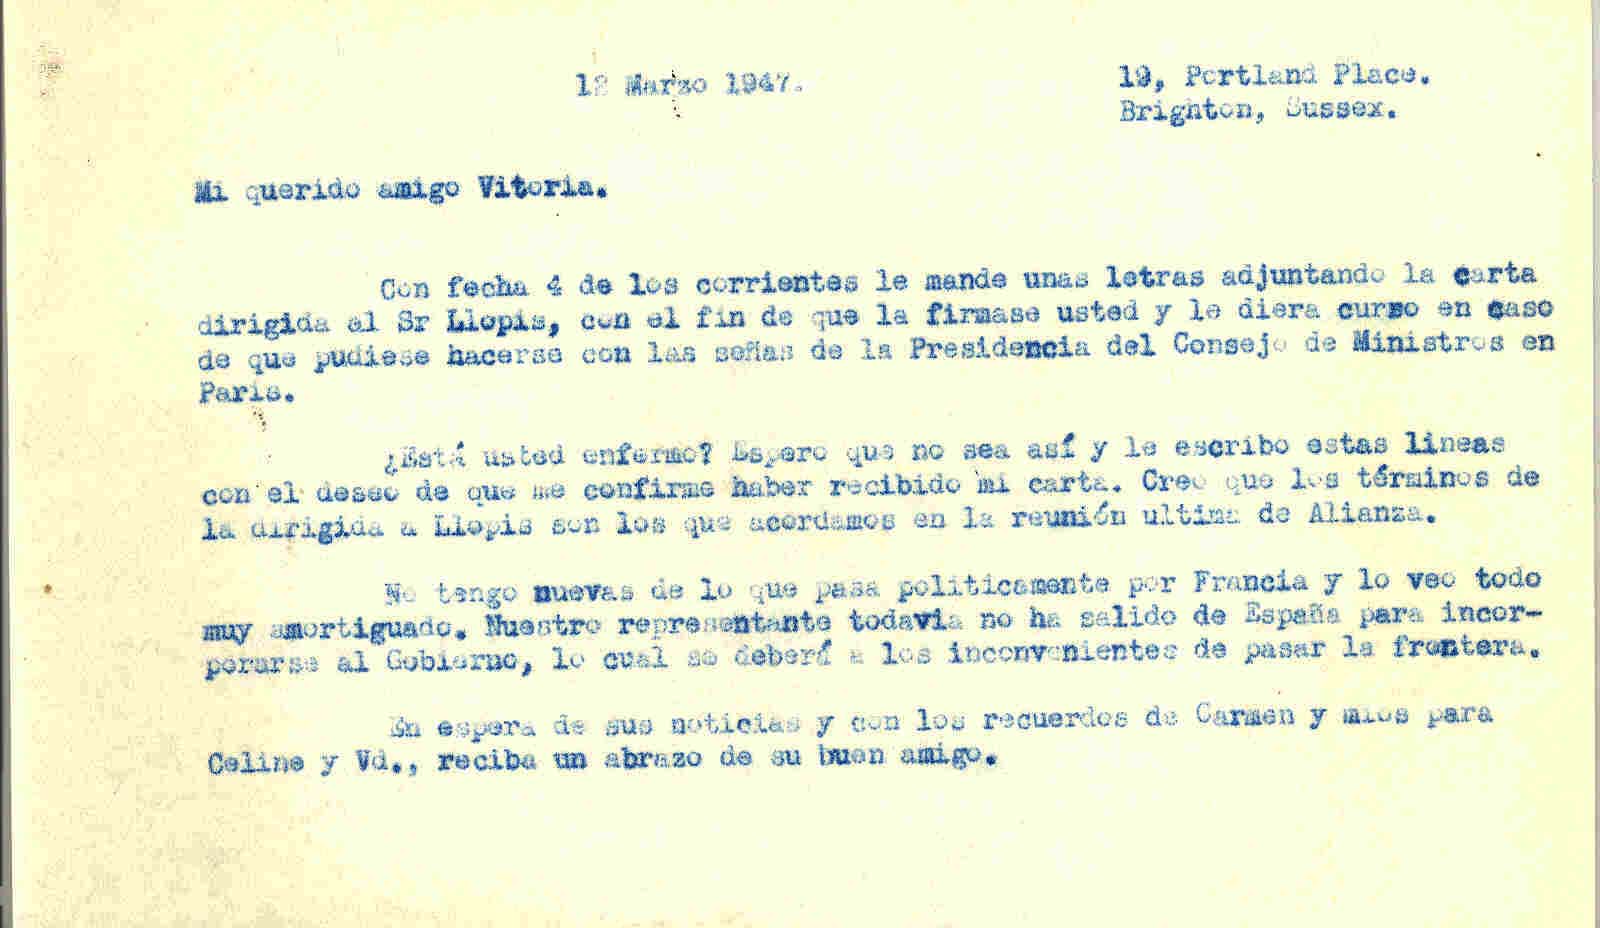 Carta a Roque Victoria para pedirle contestación para saber si ha enviado la carta a Llopis.